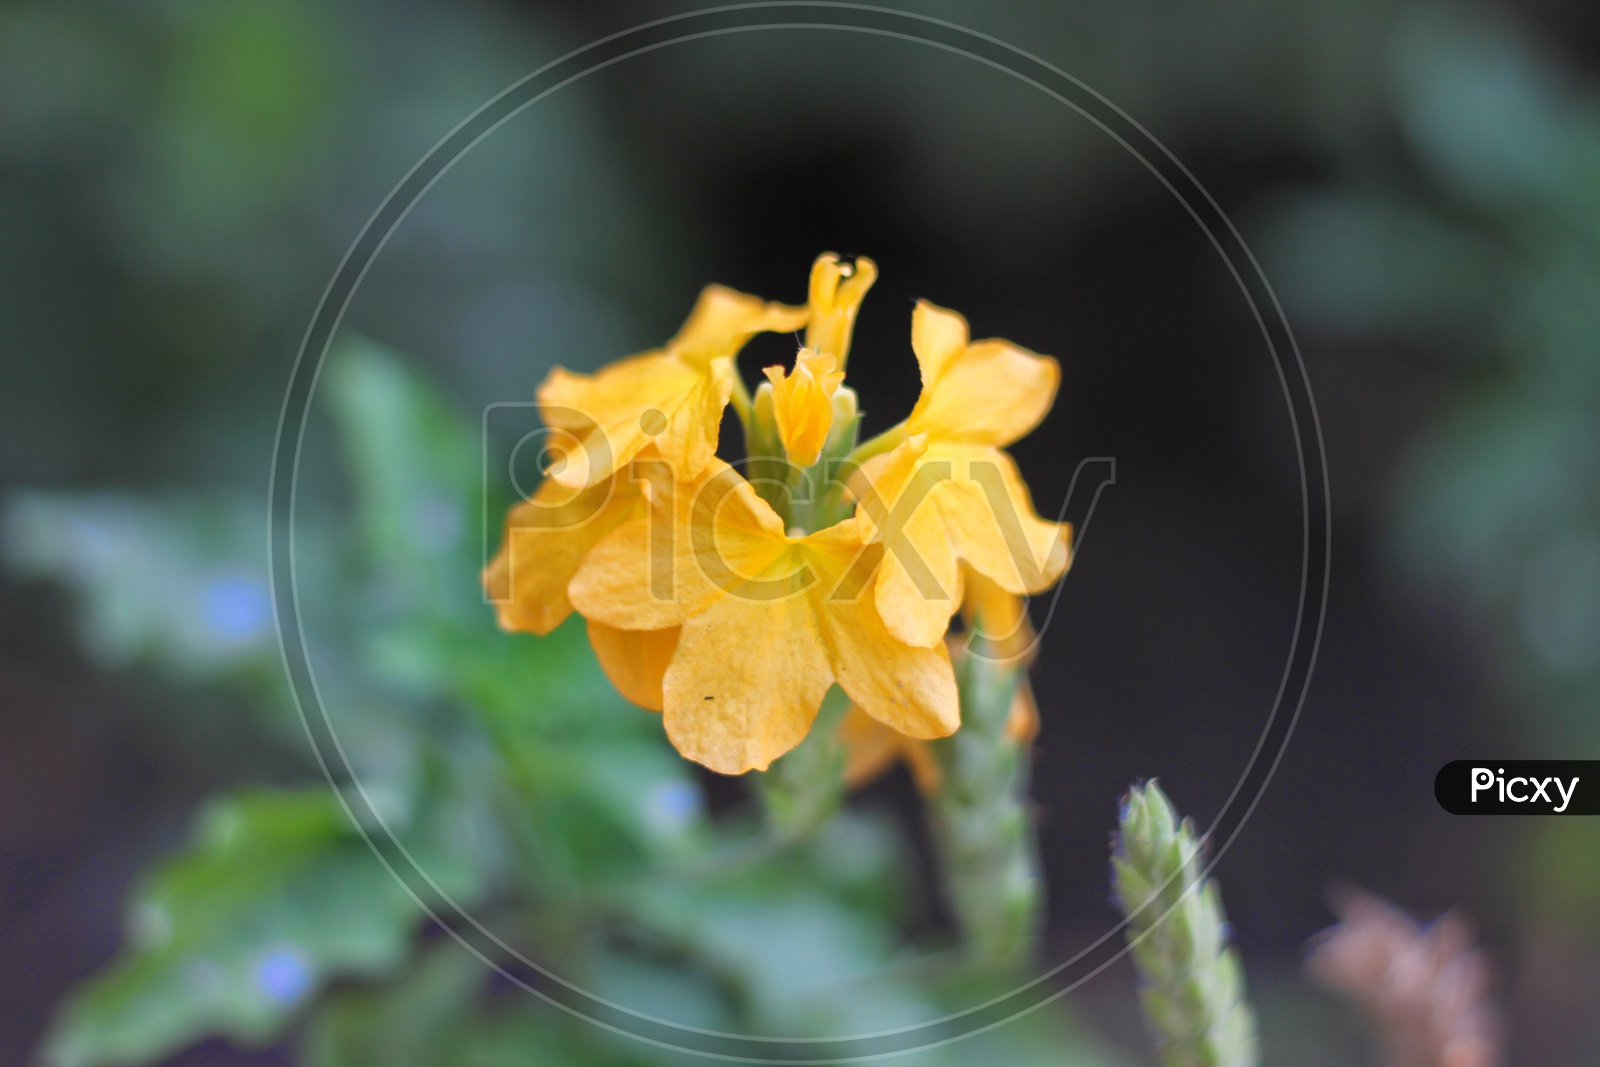 Crossandhra Infundibuliformis / Fire Cracker Flower